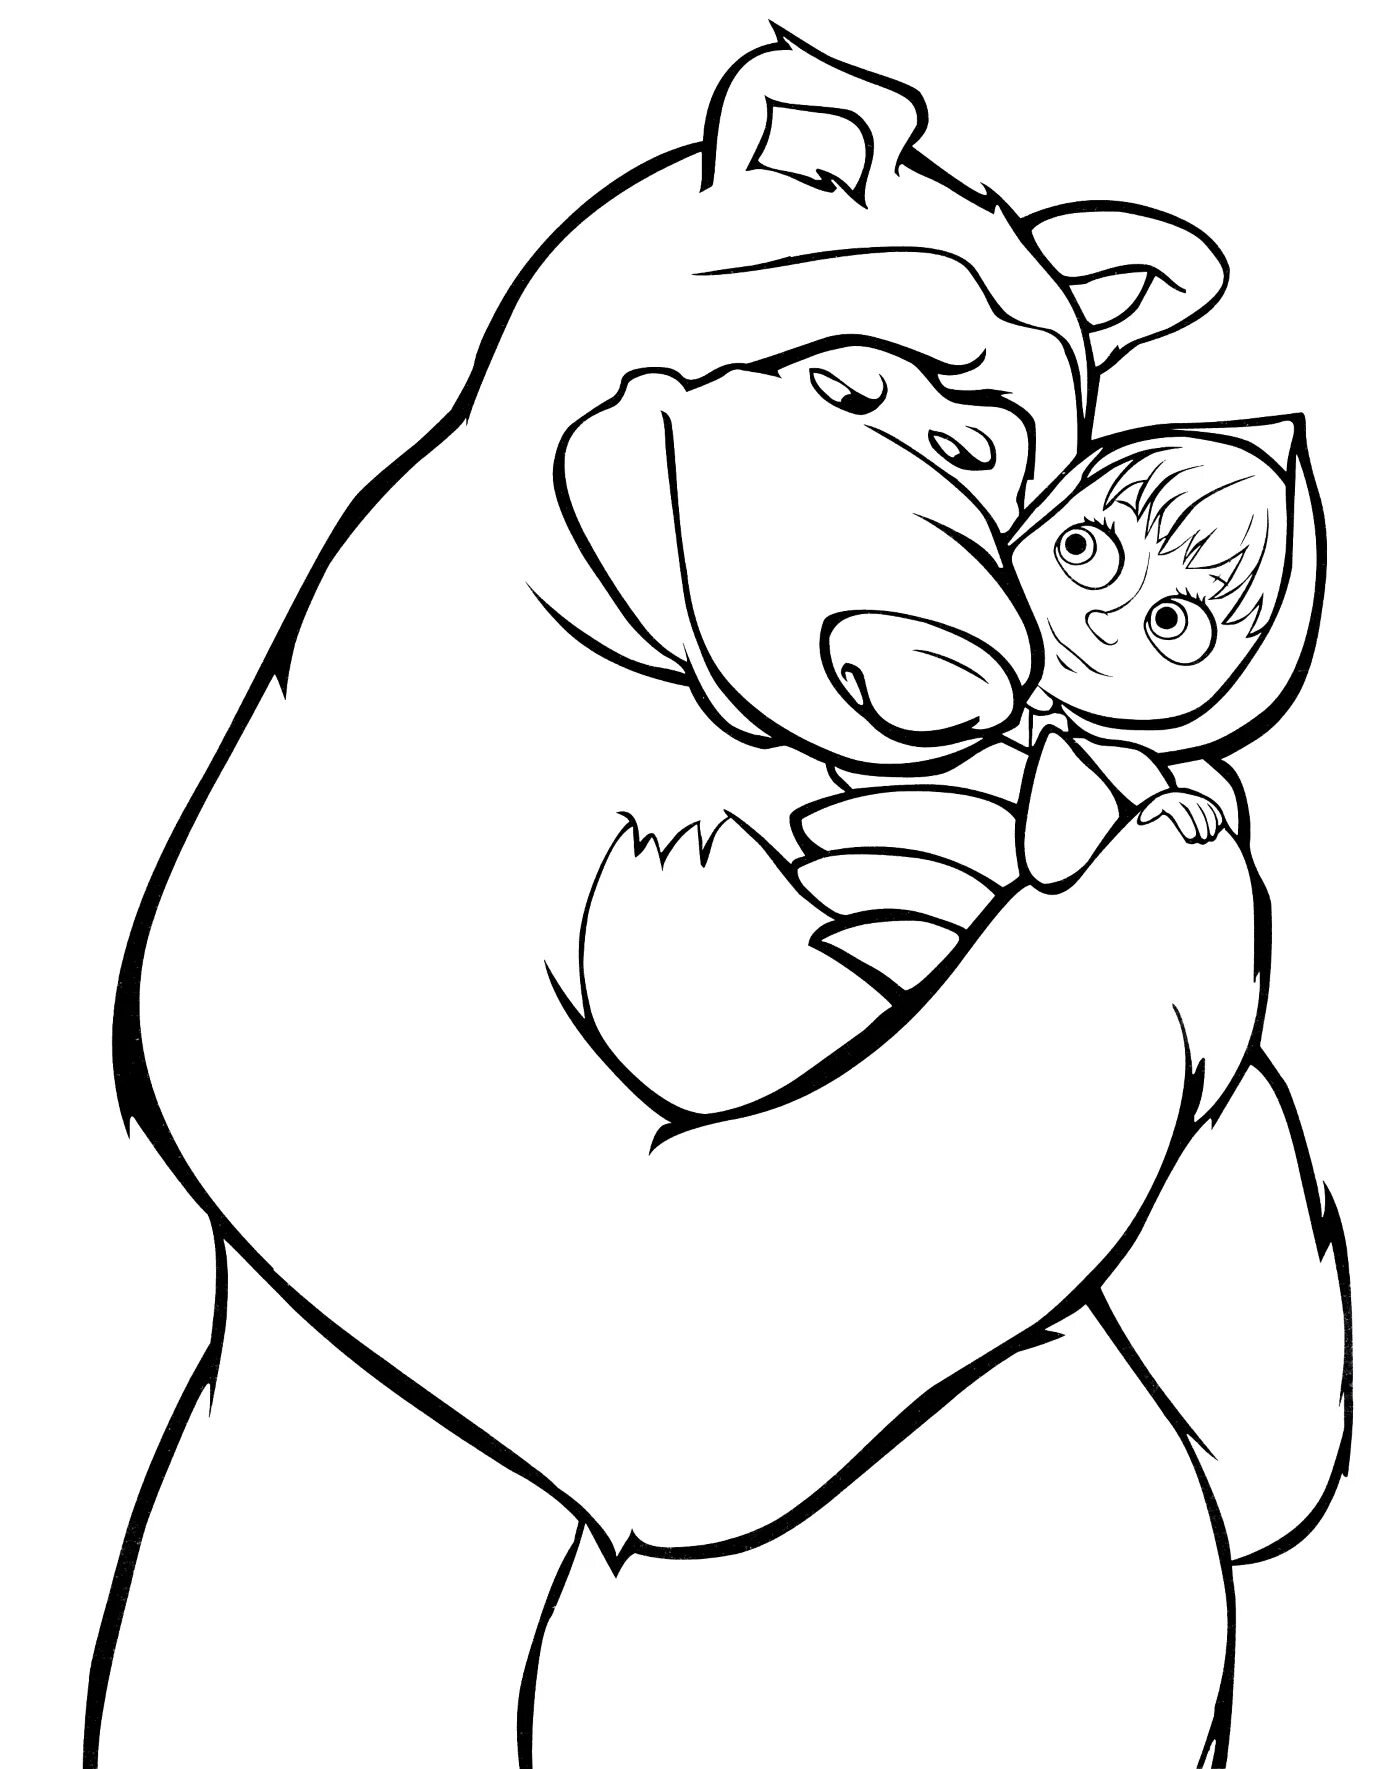 Маша и медведь рисунок карандашом поэтапно